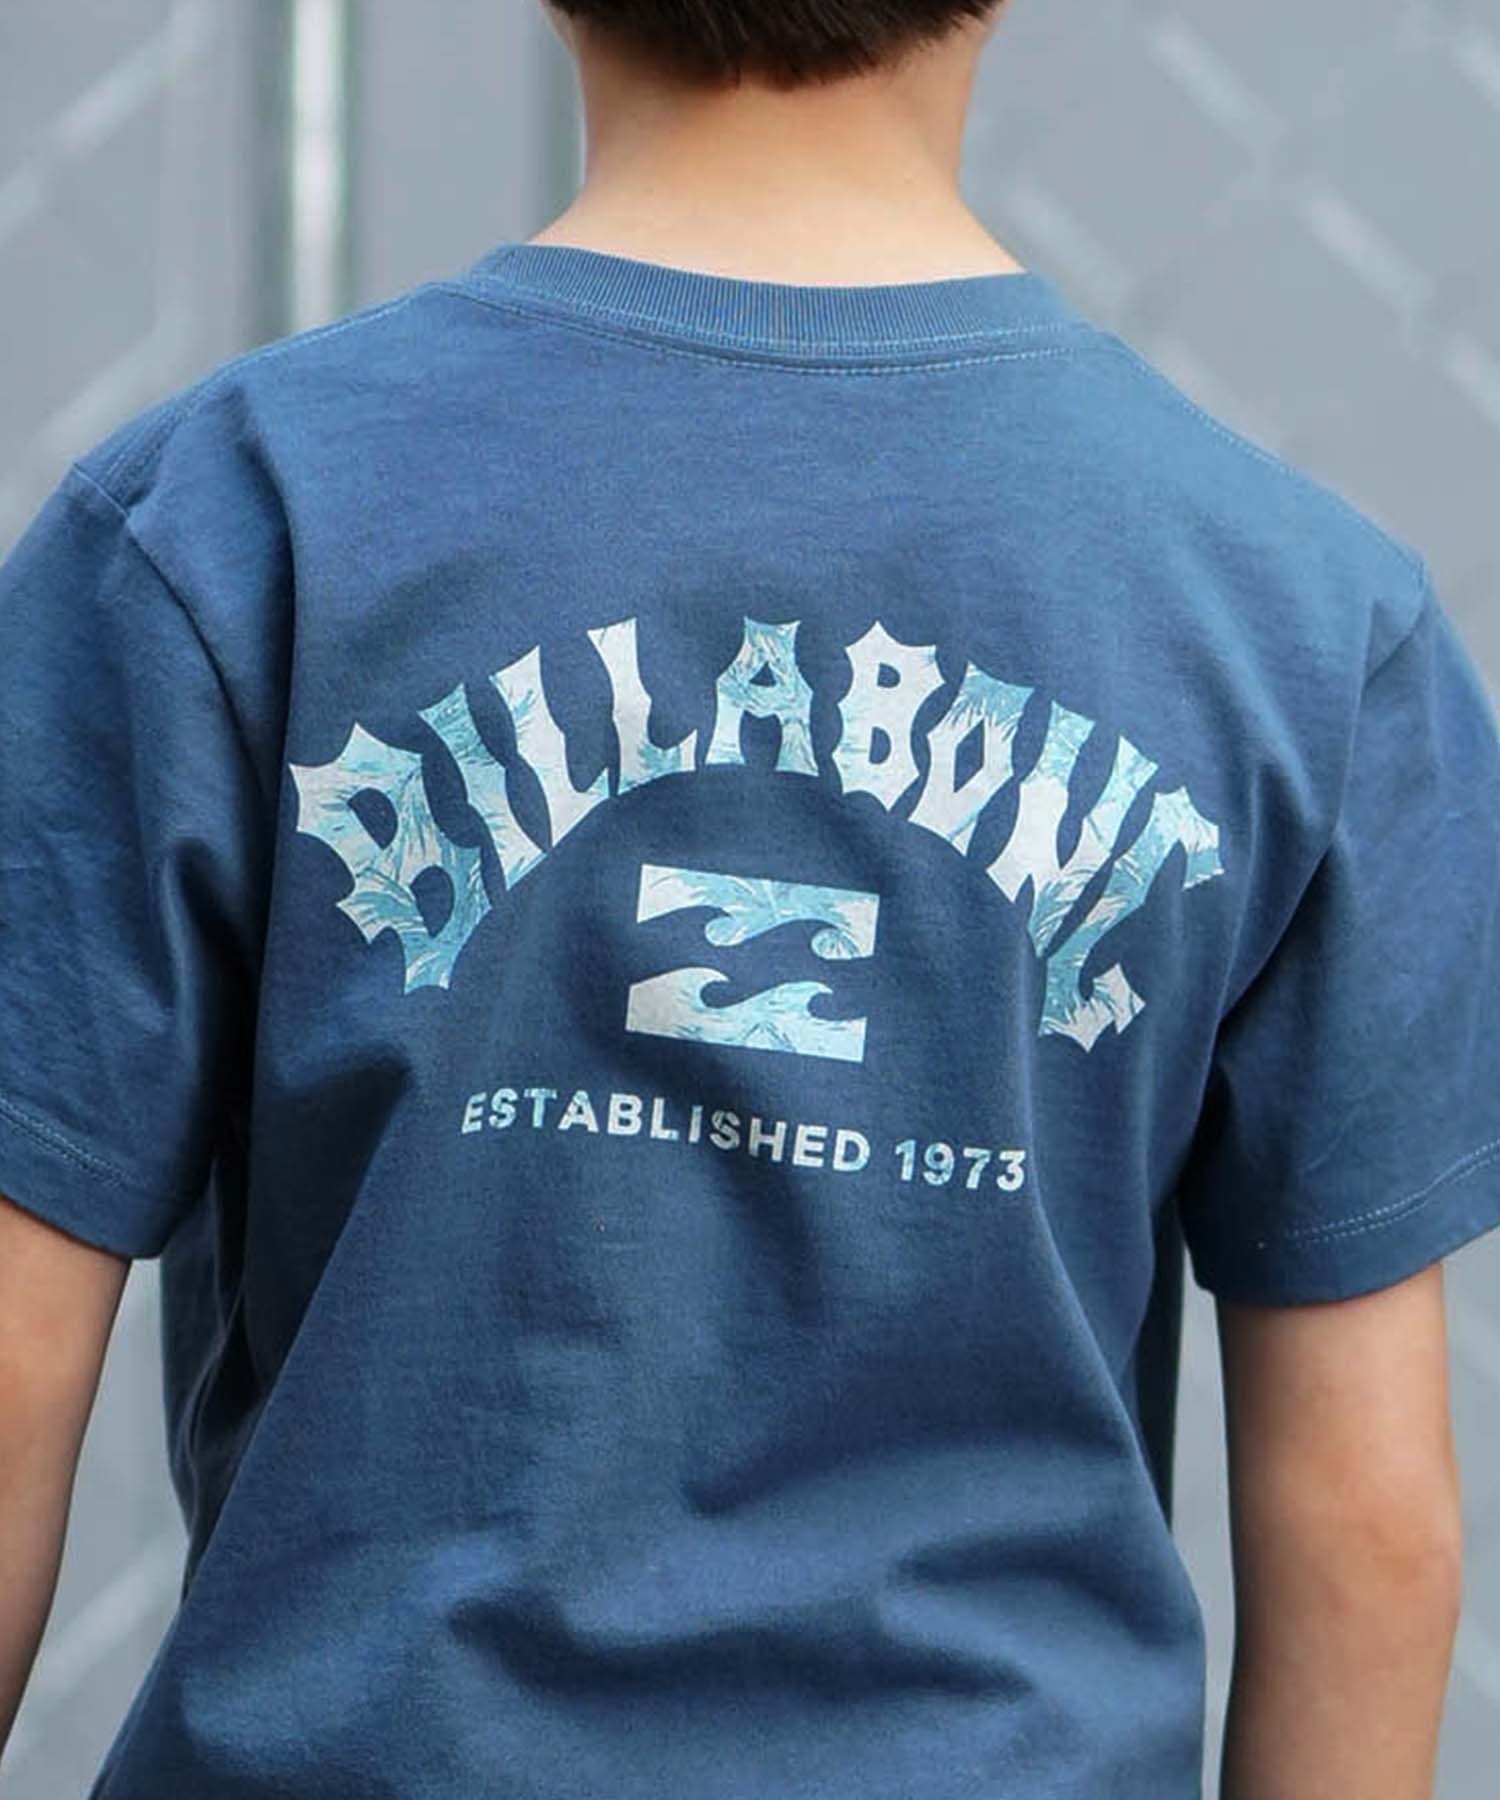 BILLABONG ビラボン ARCH FILL キッズ 半袖 Tシャツ バックプリント BE015-200(IND-130cm)